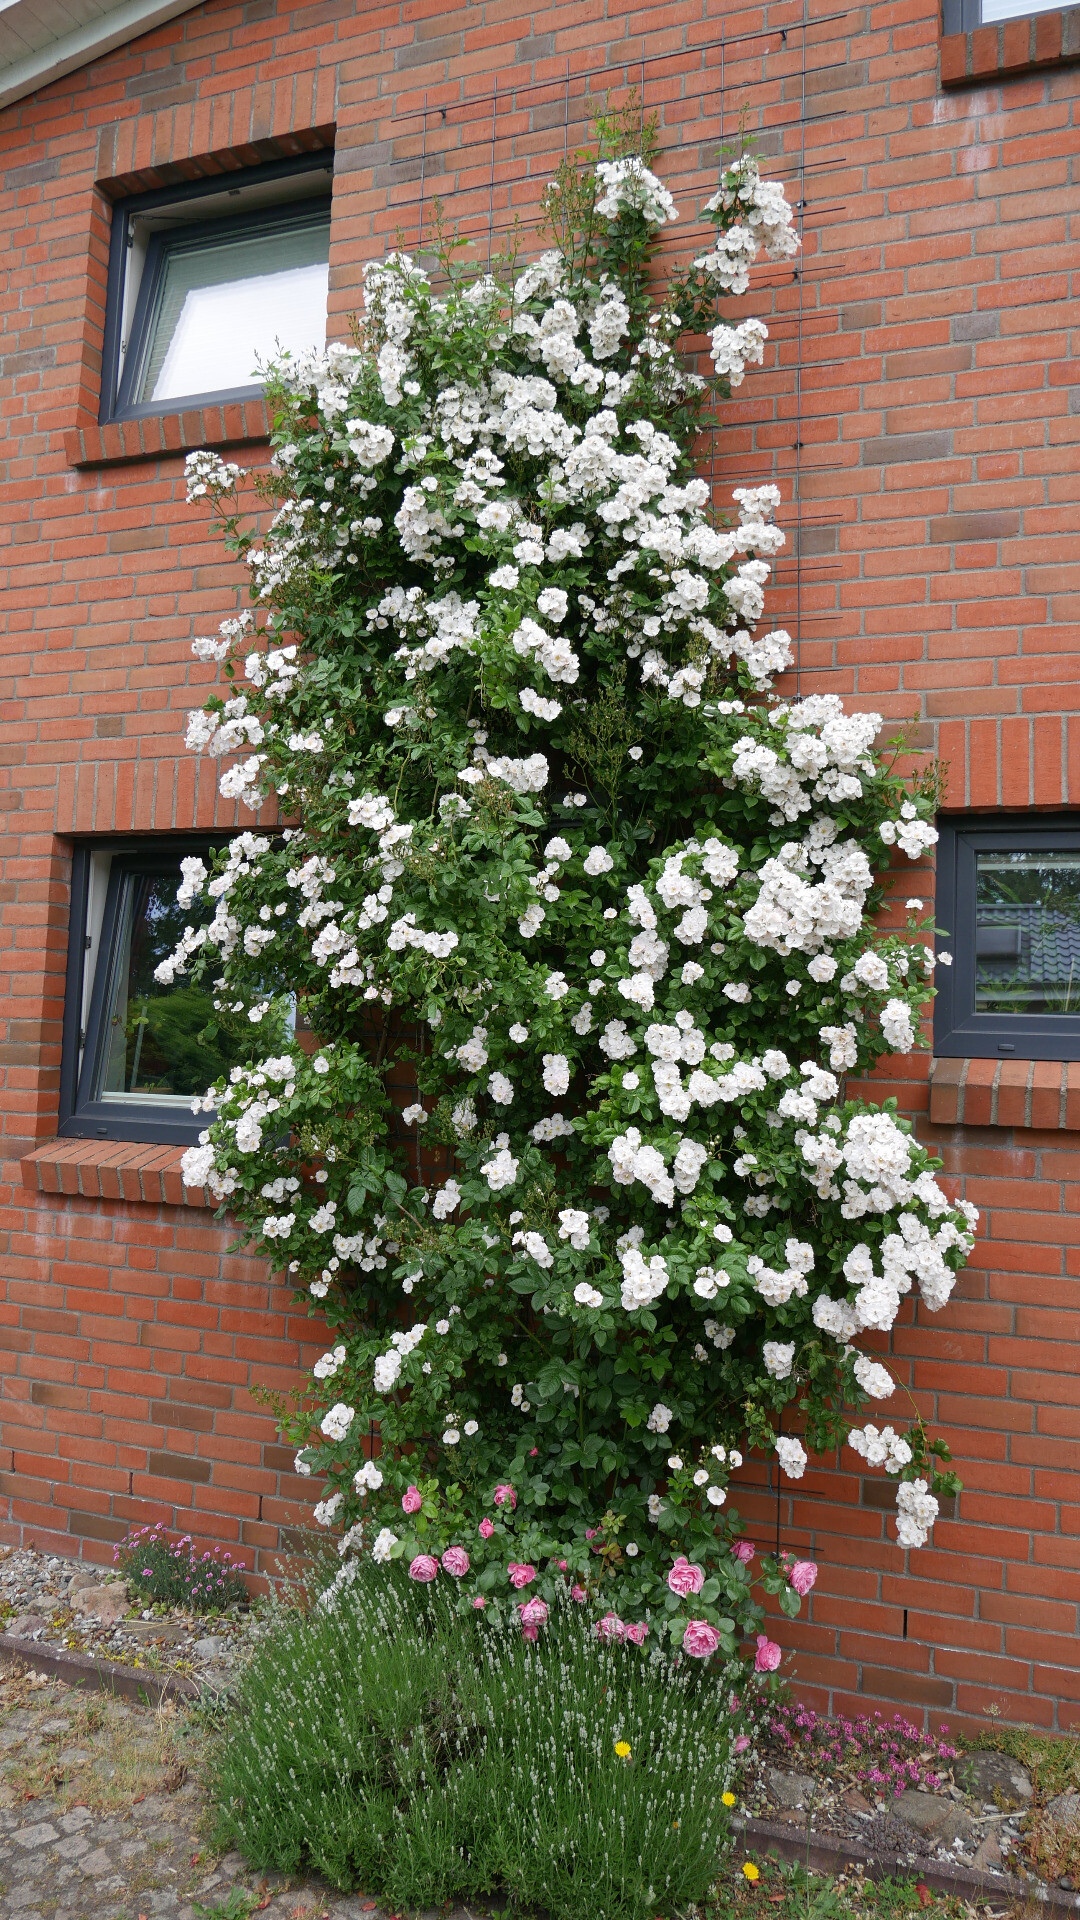 Rambler rose Perennial Blush climbing up a trellis on a brickwall.